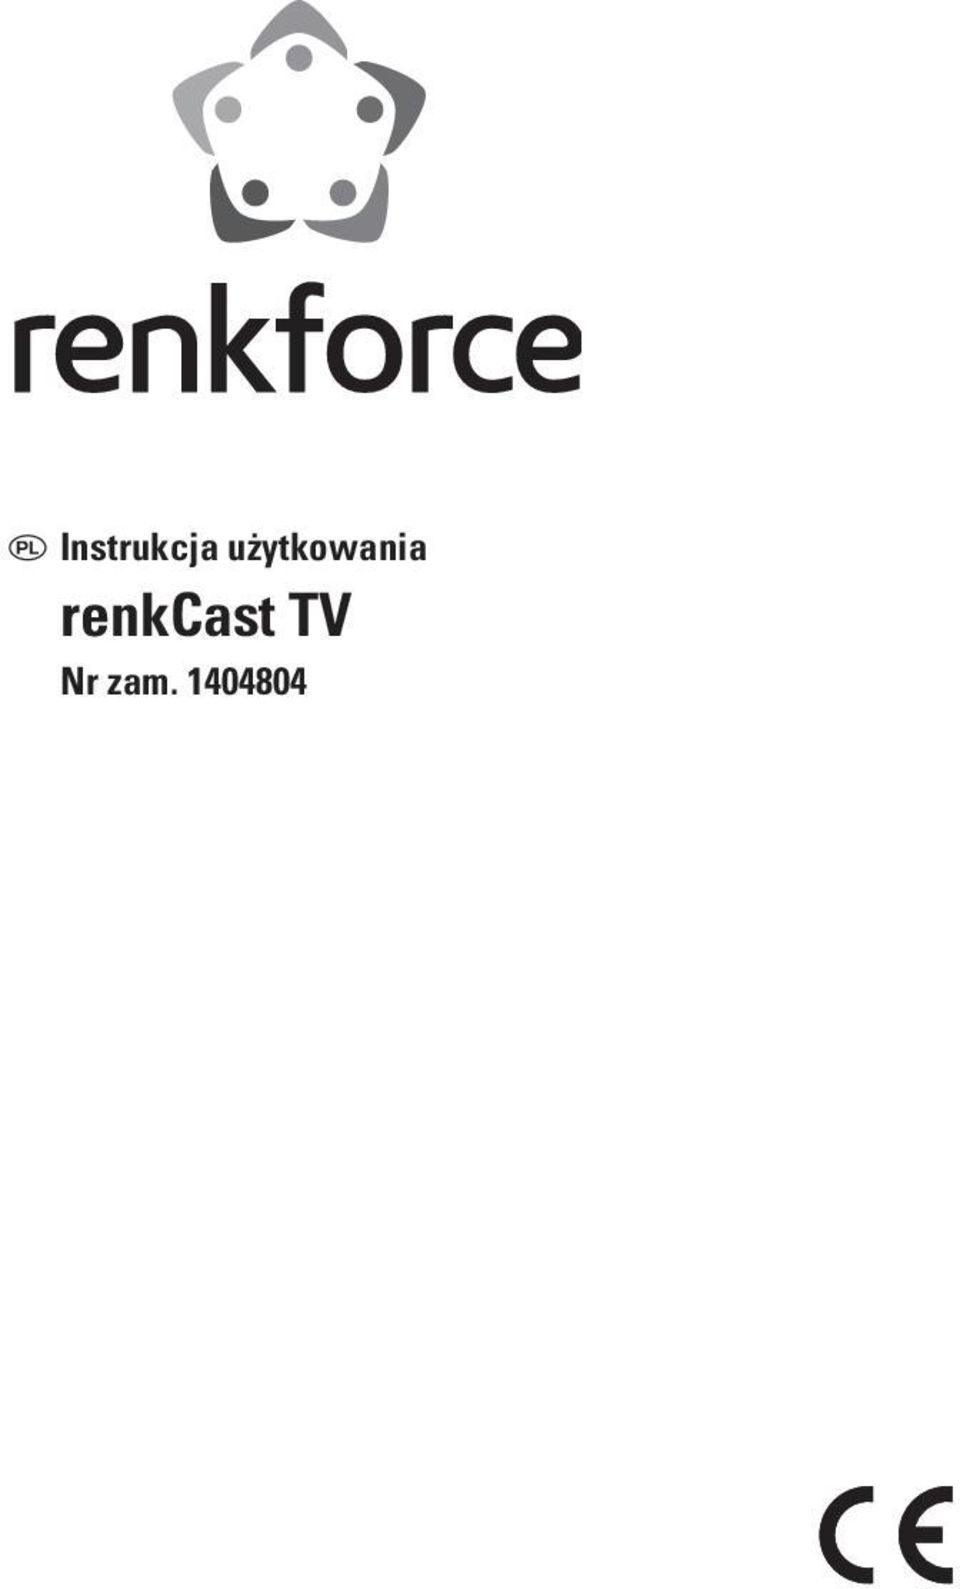 renkcast TV